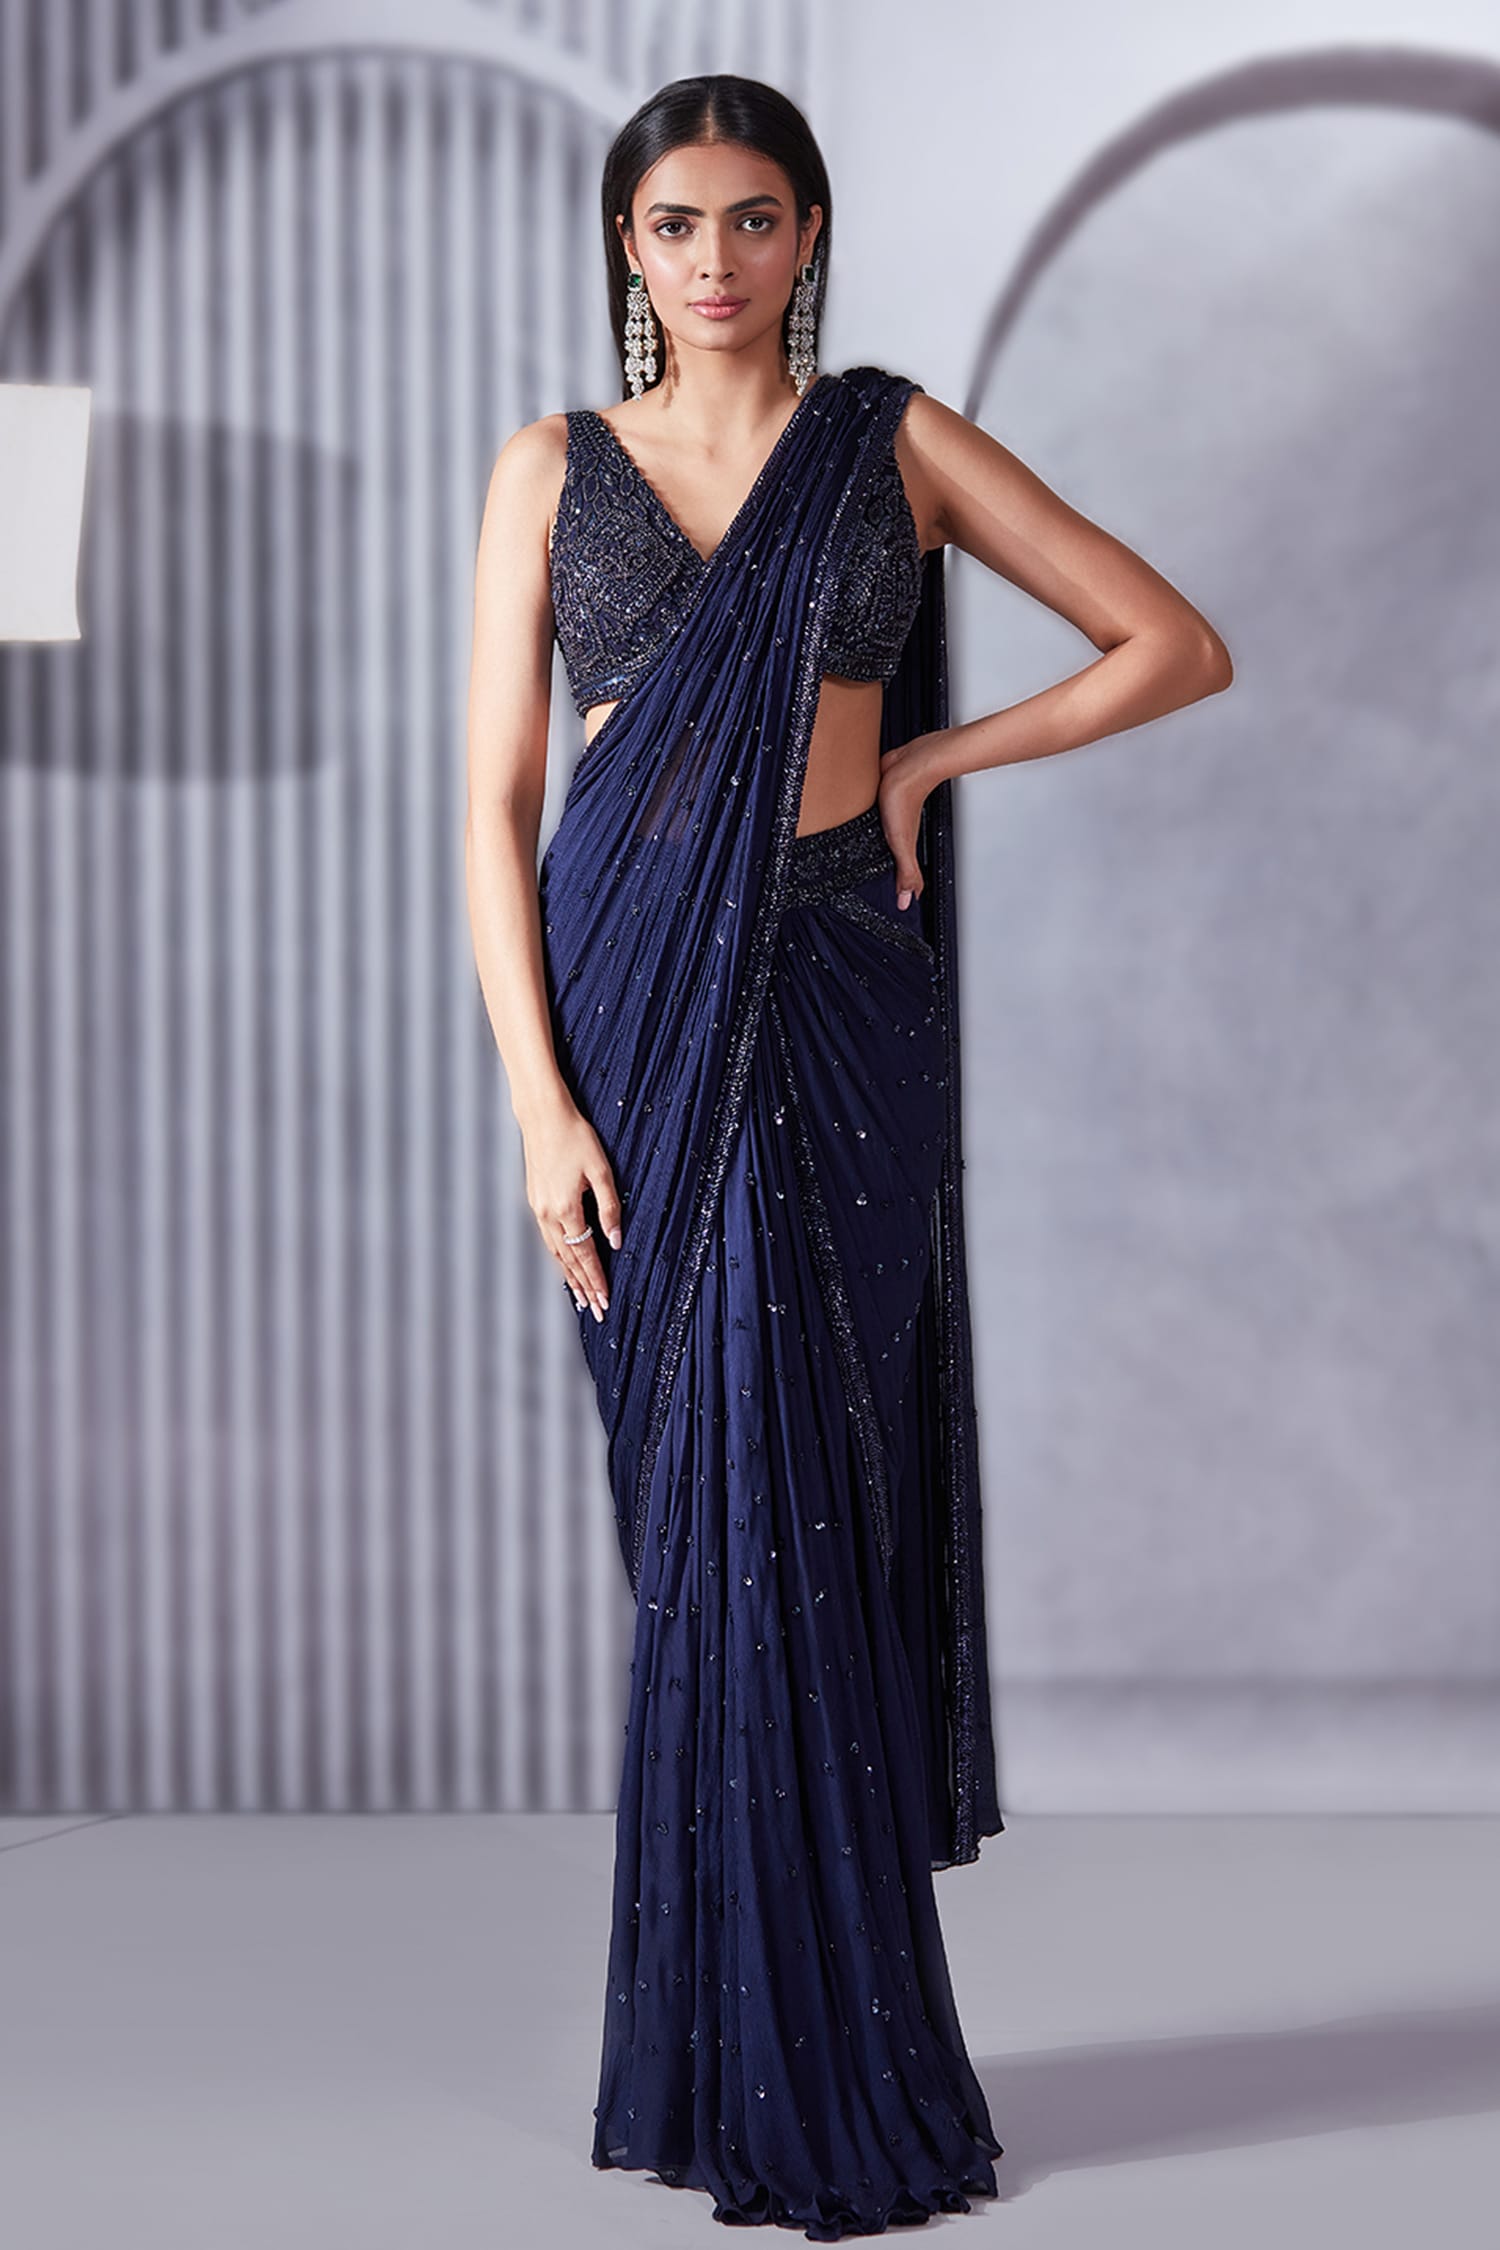 Blue And Black designer saree | Saree, Saree designs, Dress